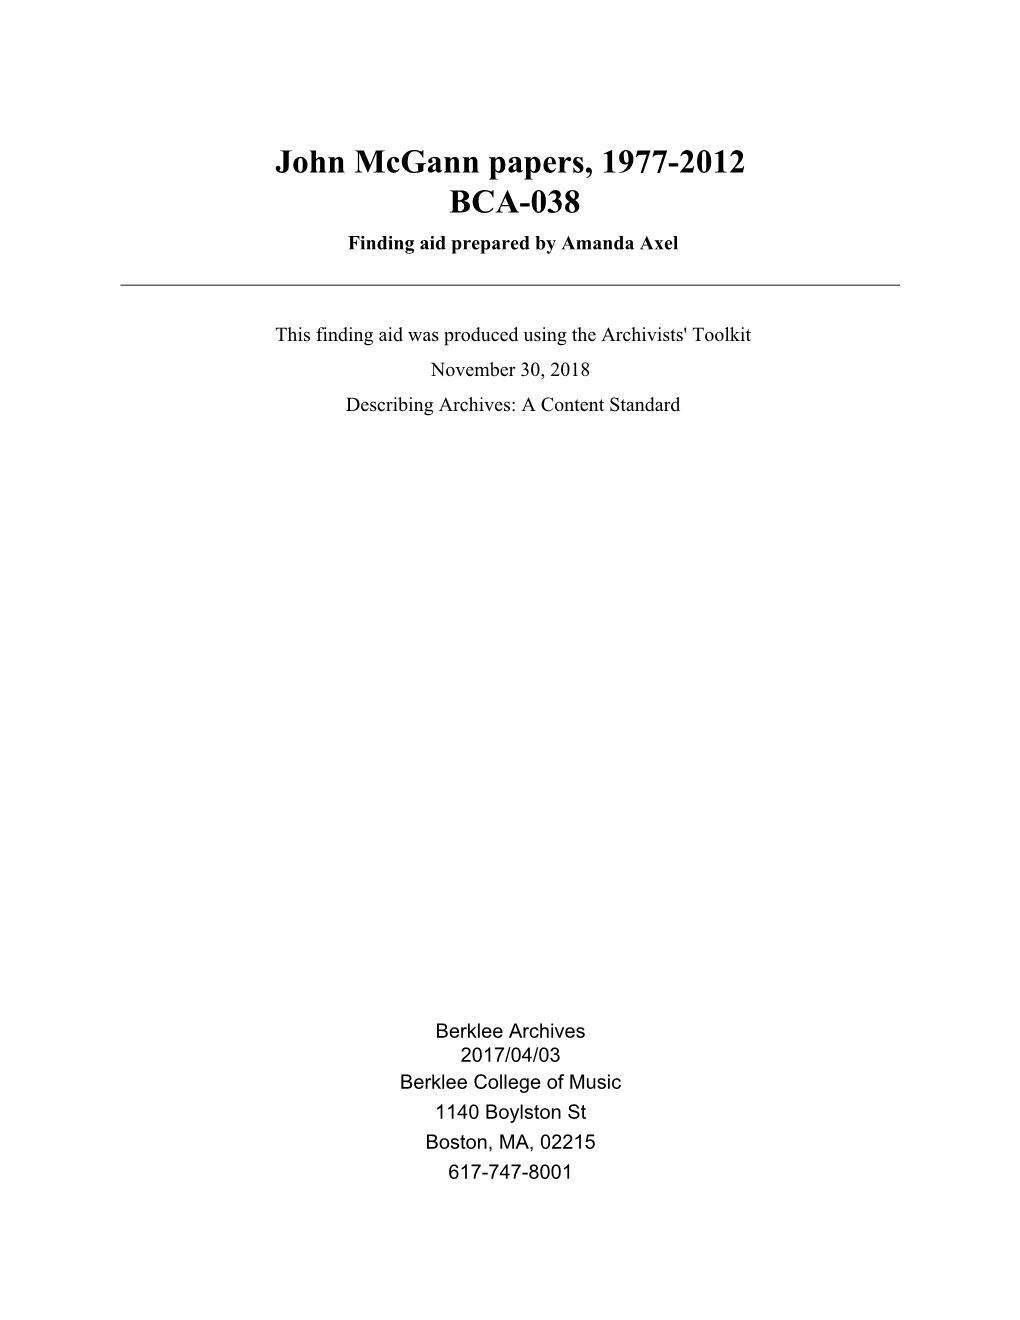 John Mcgann Papers, 1977-2012 BCA-038 Finding Aid Prepared by Amanda Axel